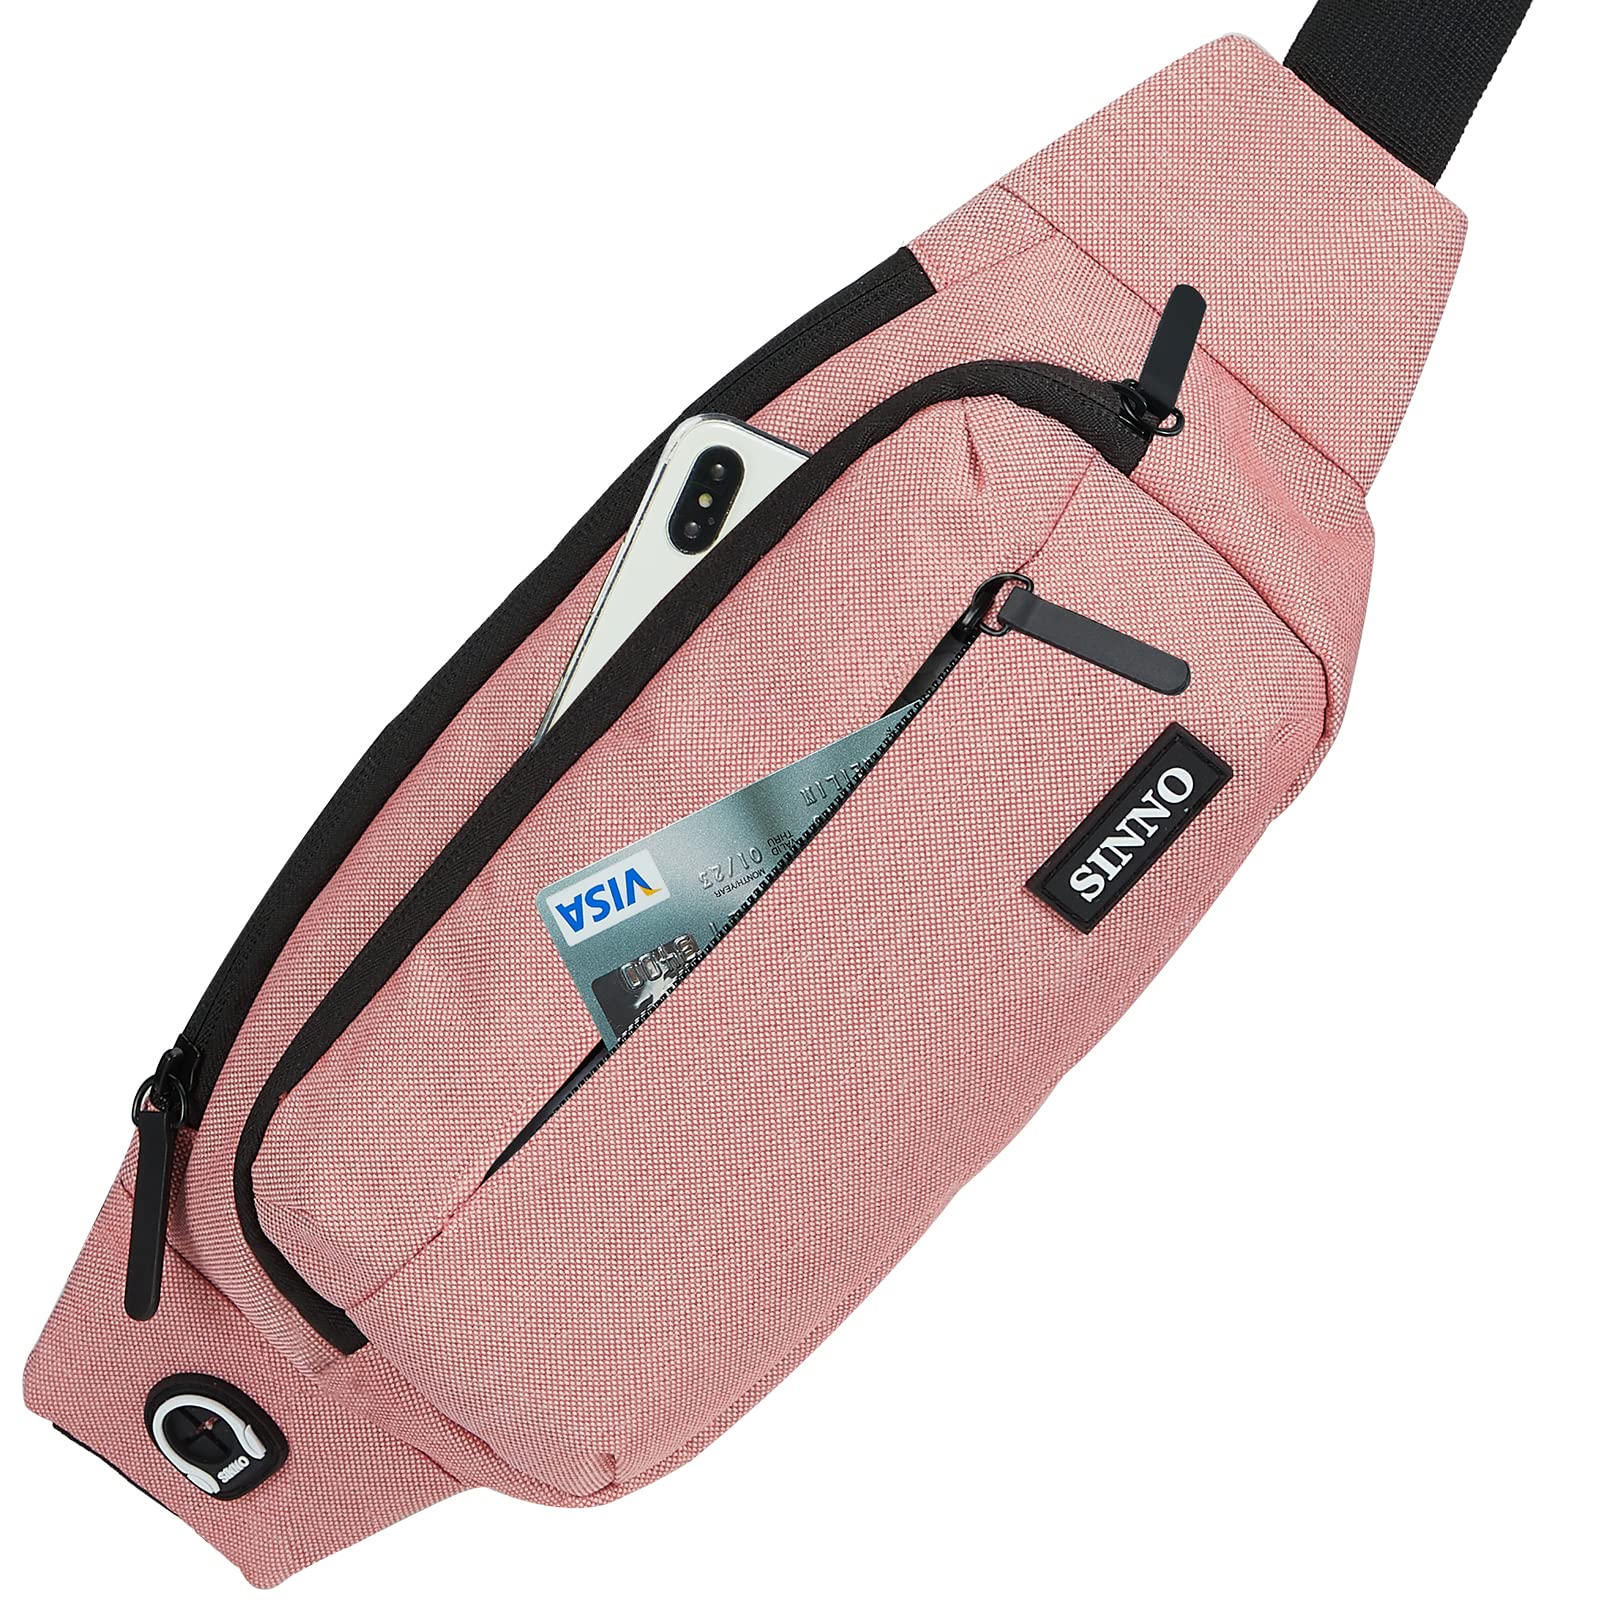  SINNO Large Crossbody Fanny Pack for Women Men Belt Bag With  4-Zipper Pockets for Travel Running Hiking Workout Dog Walking Outdoors  Sport